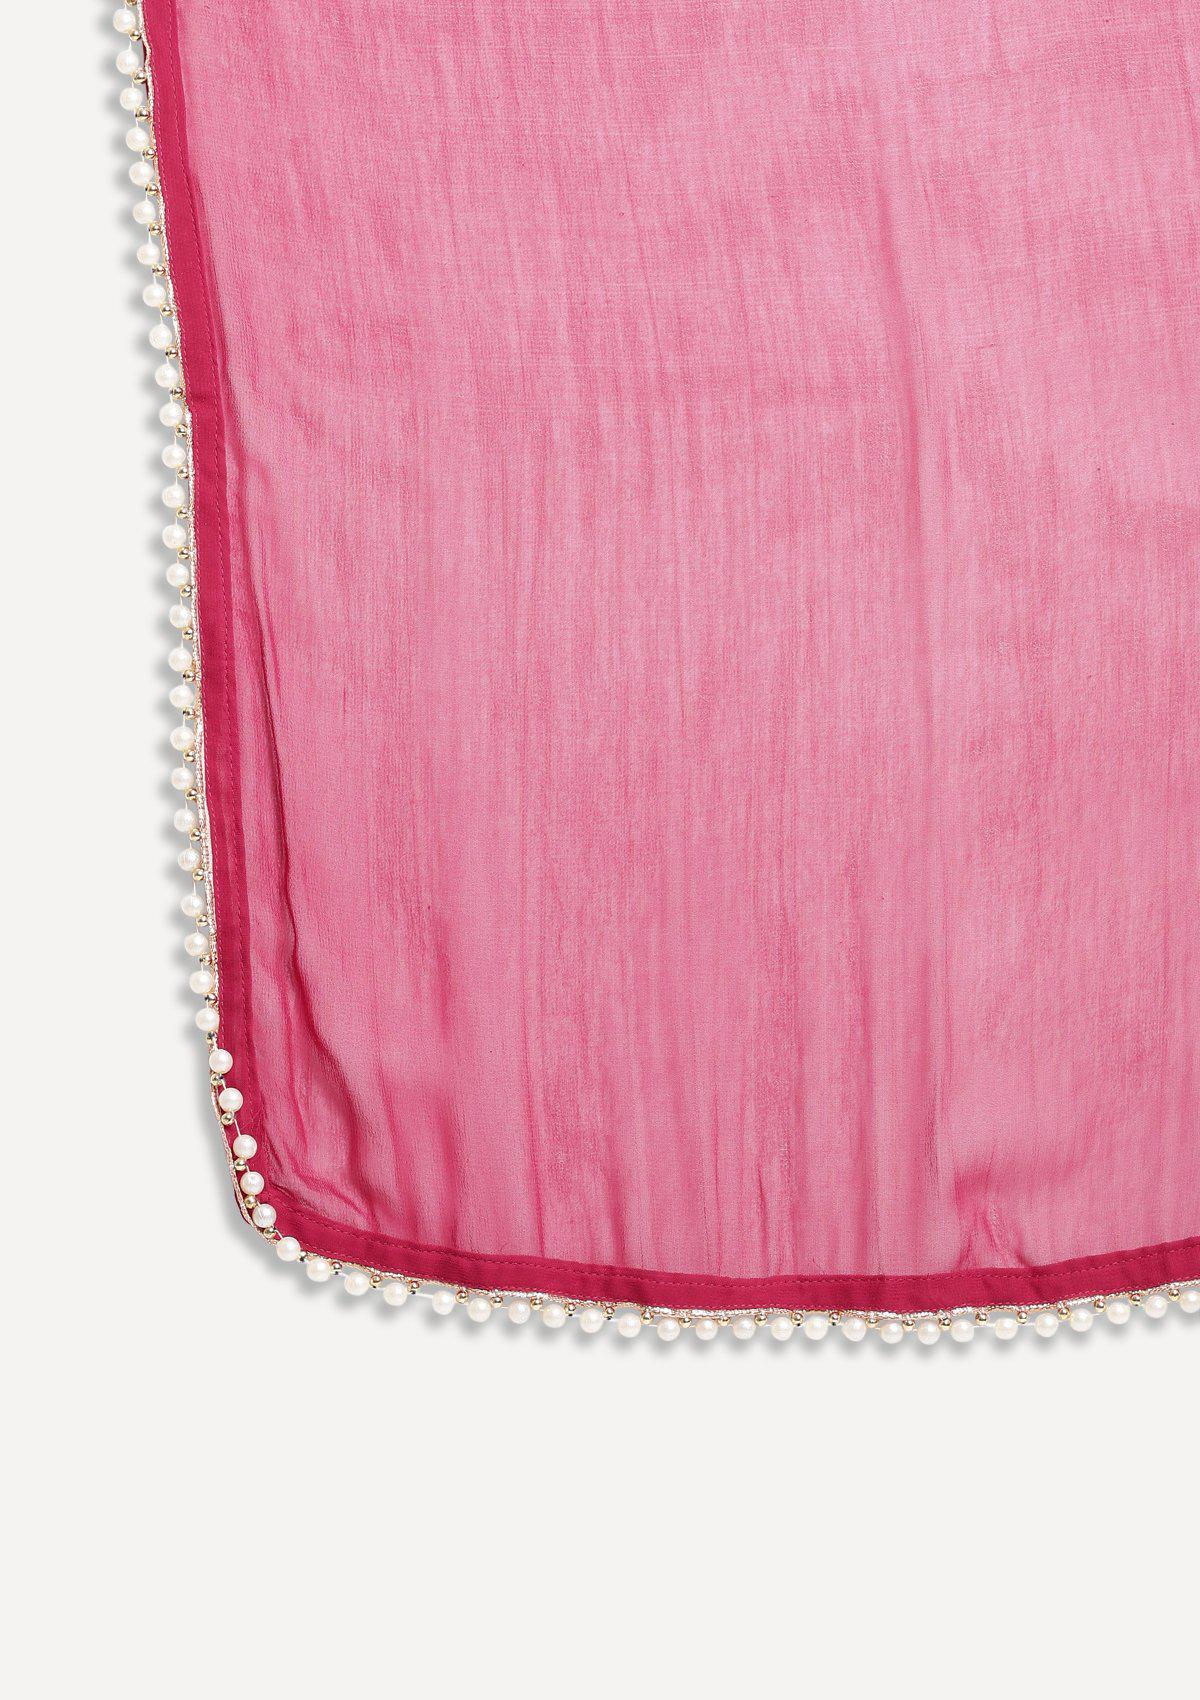 Rani Pink Stonework Georgette Designer Salwar Suit-Koskii